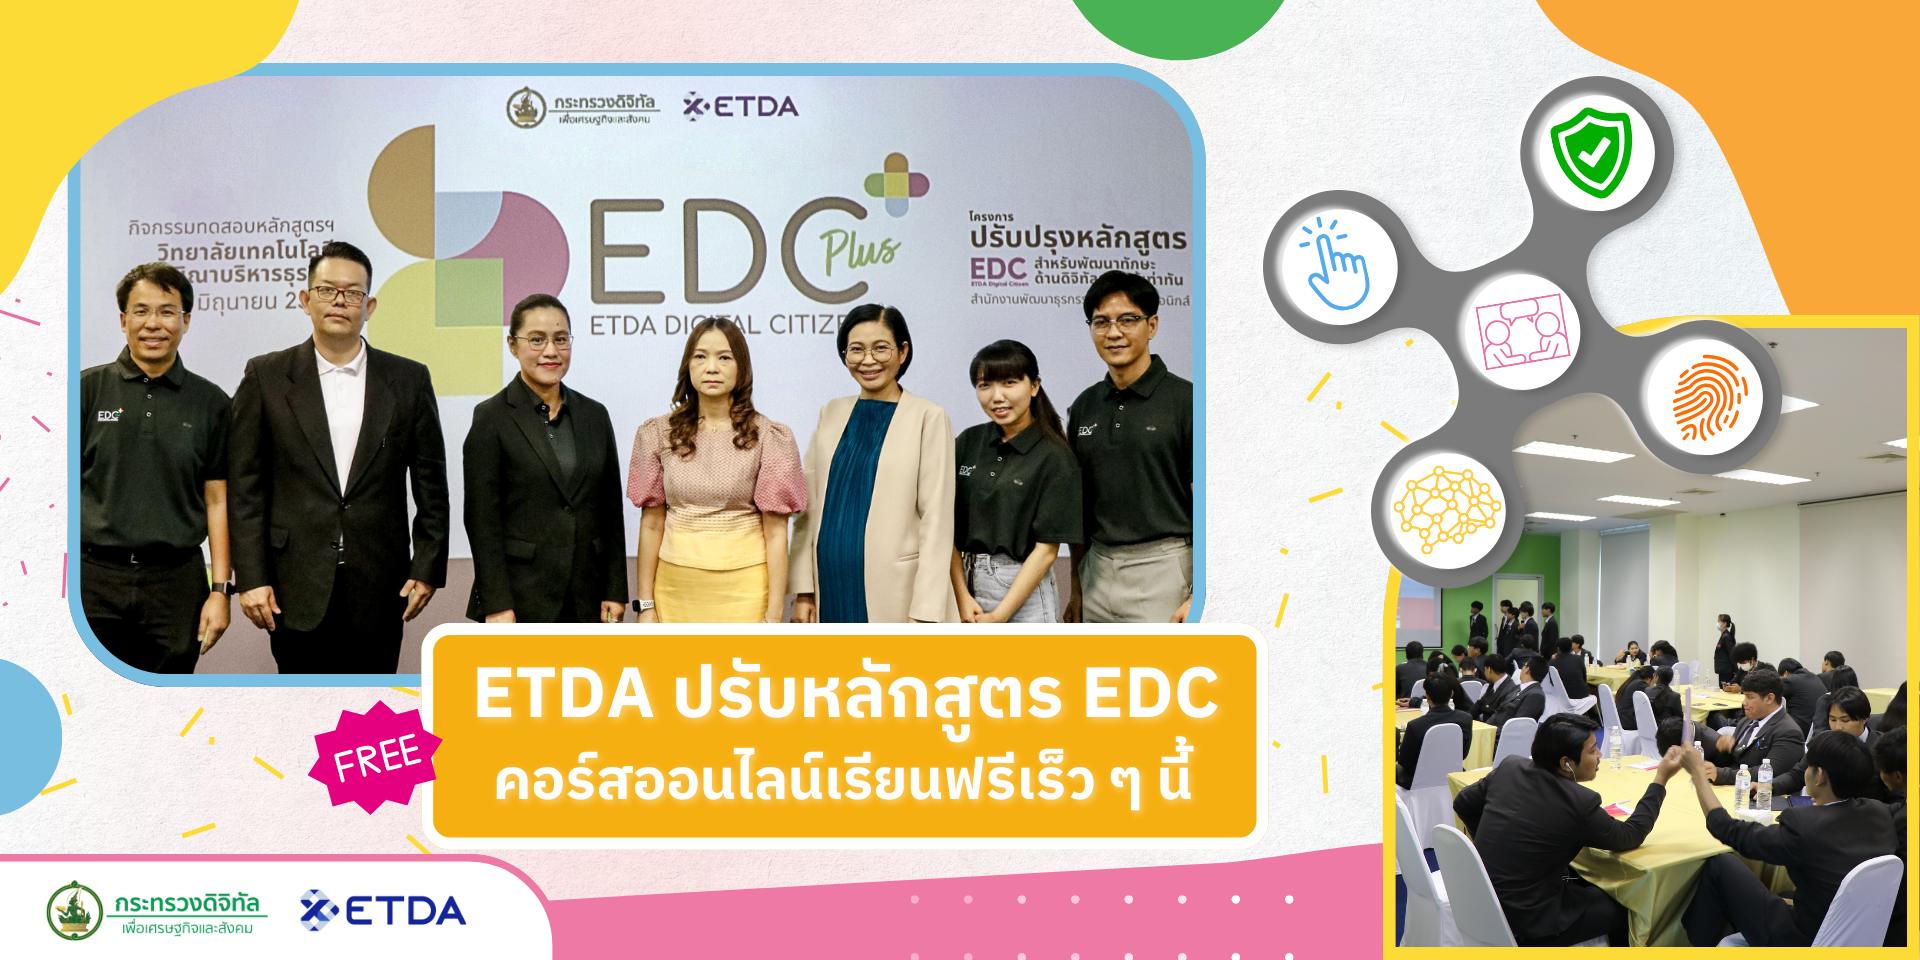 ETDA ปรับปรุงหลักสูตร EDC ยกระดับ DQ 5 ด้าน  สำหรับวัยแรกเข้าทำงาน “First Jobber” เตรียมเปิดให้เรียนฟรีผ่านออนไลน์เร็ว ๆ นี้